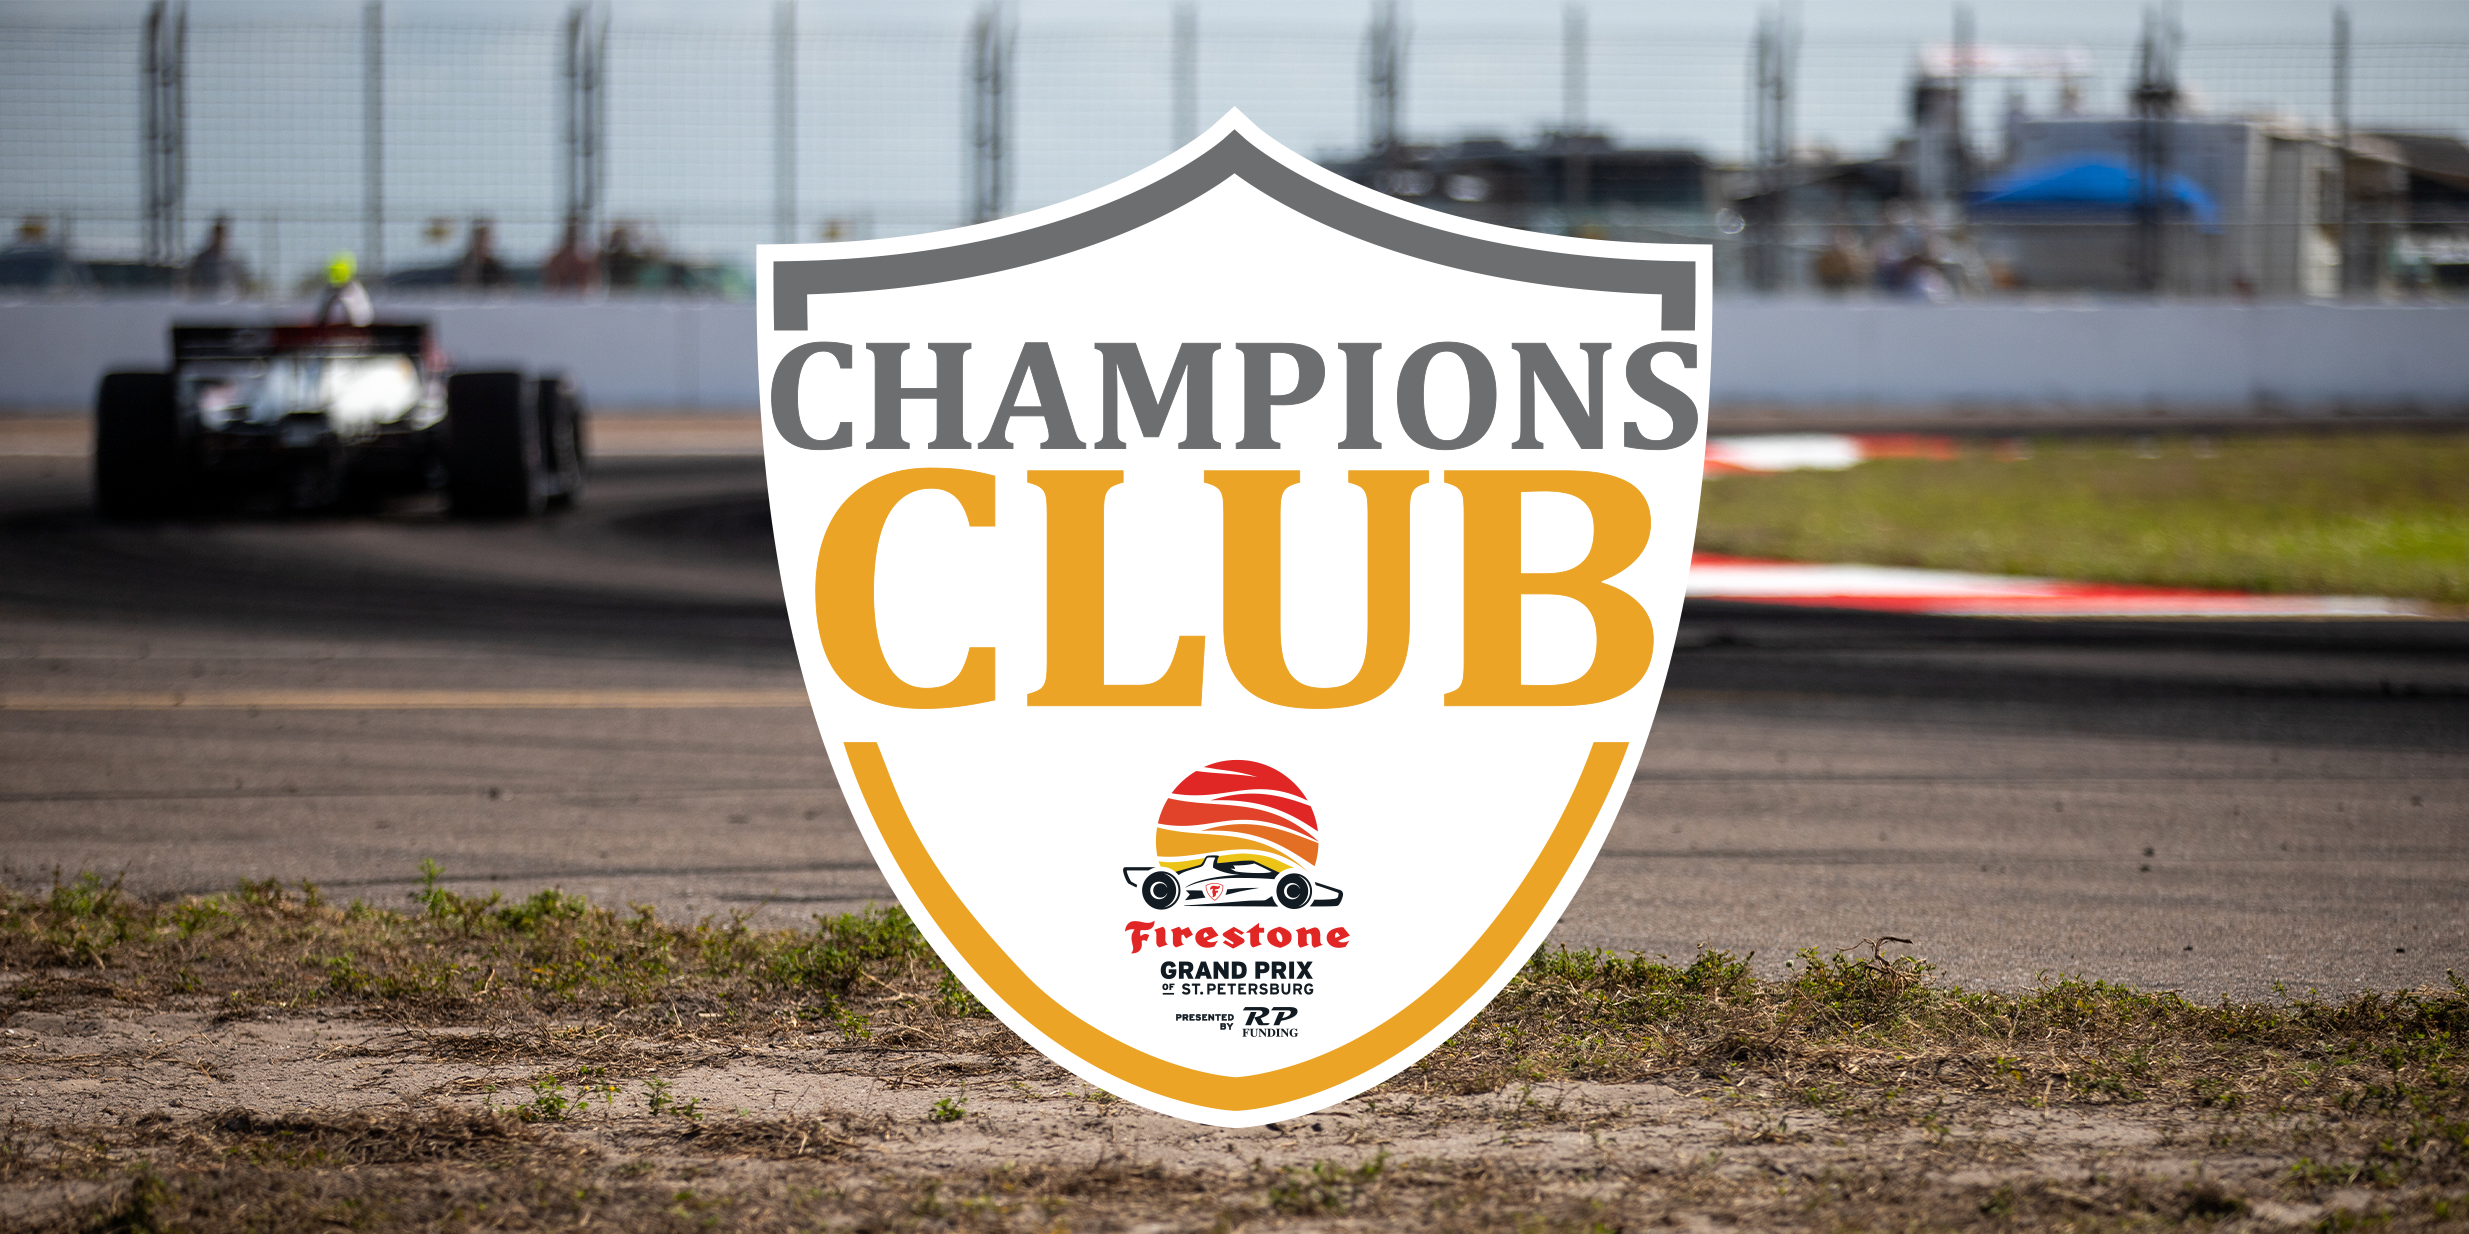 The Grand Prix Club